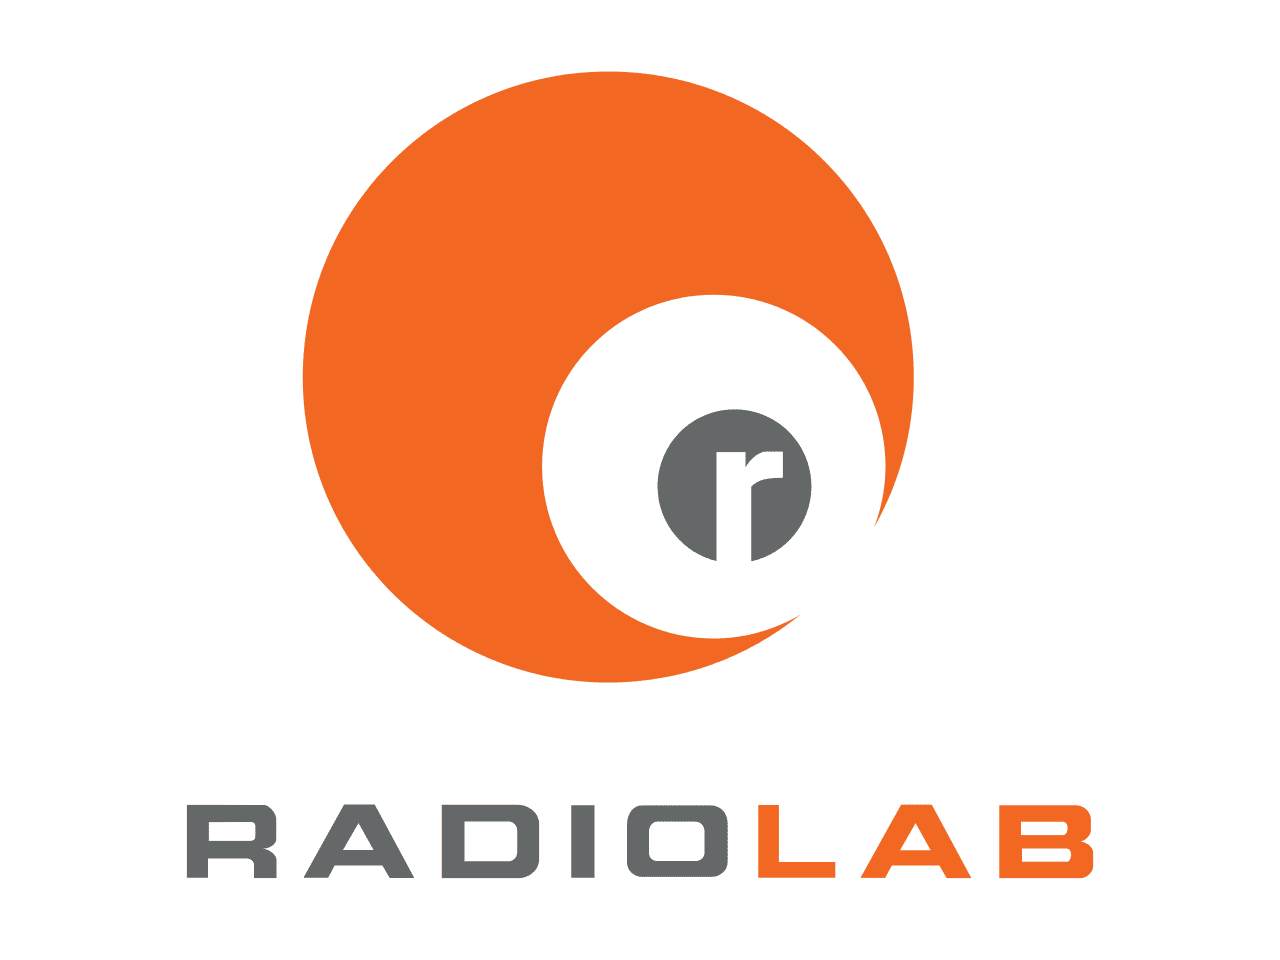 Radiolab podcast